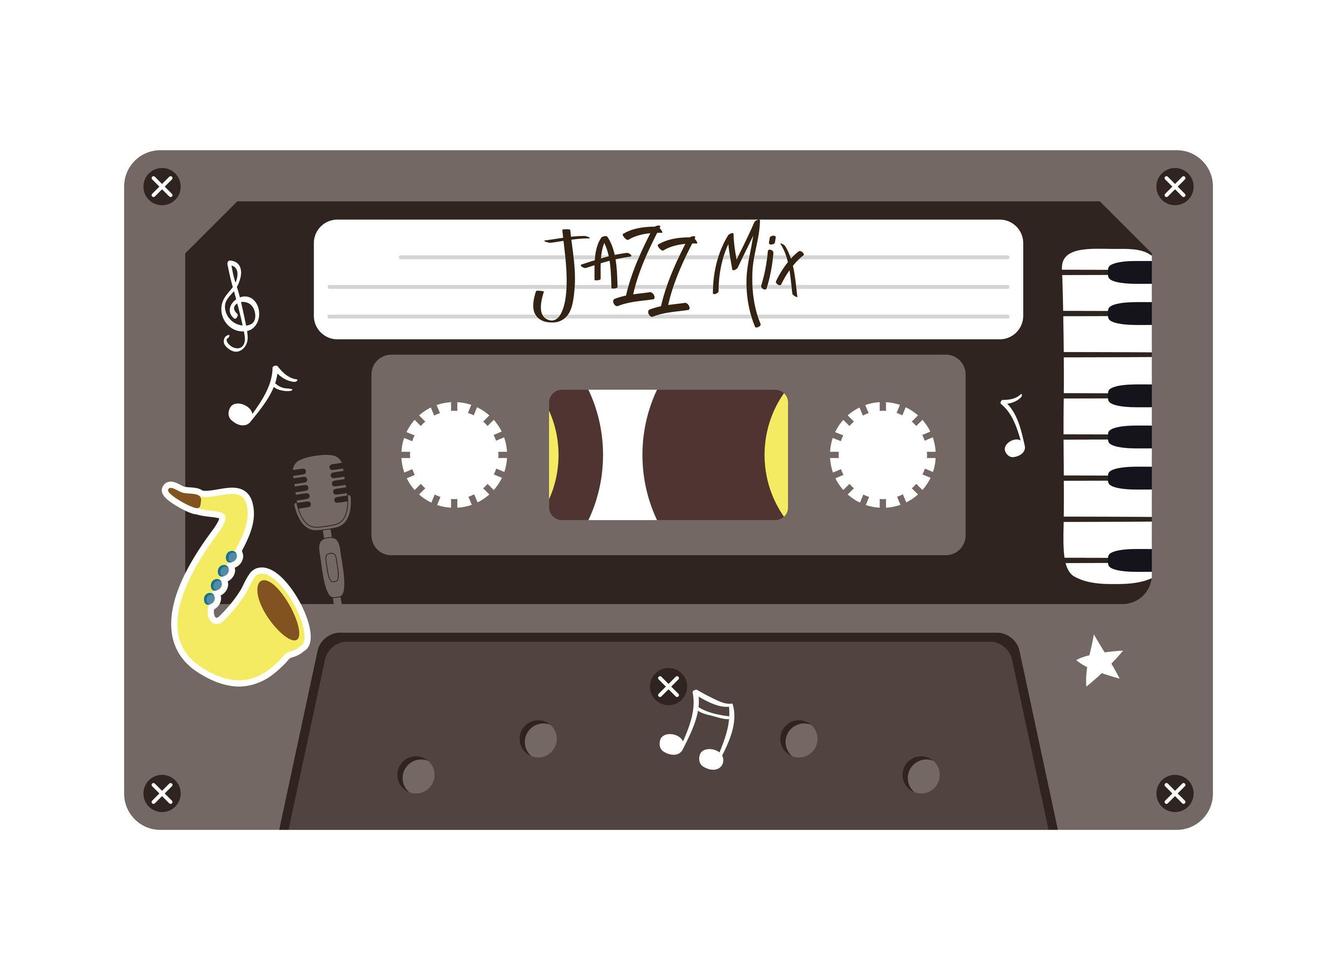 jazz mix retrò disegno vettoriale di cassette